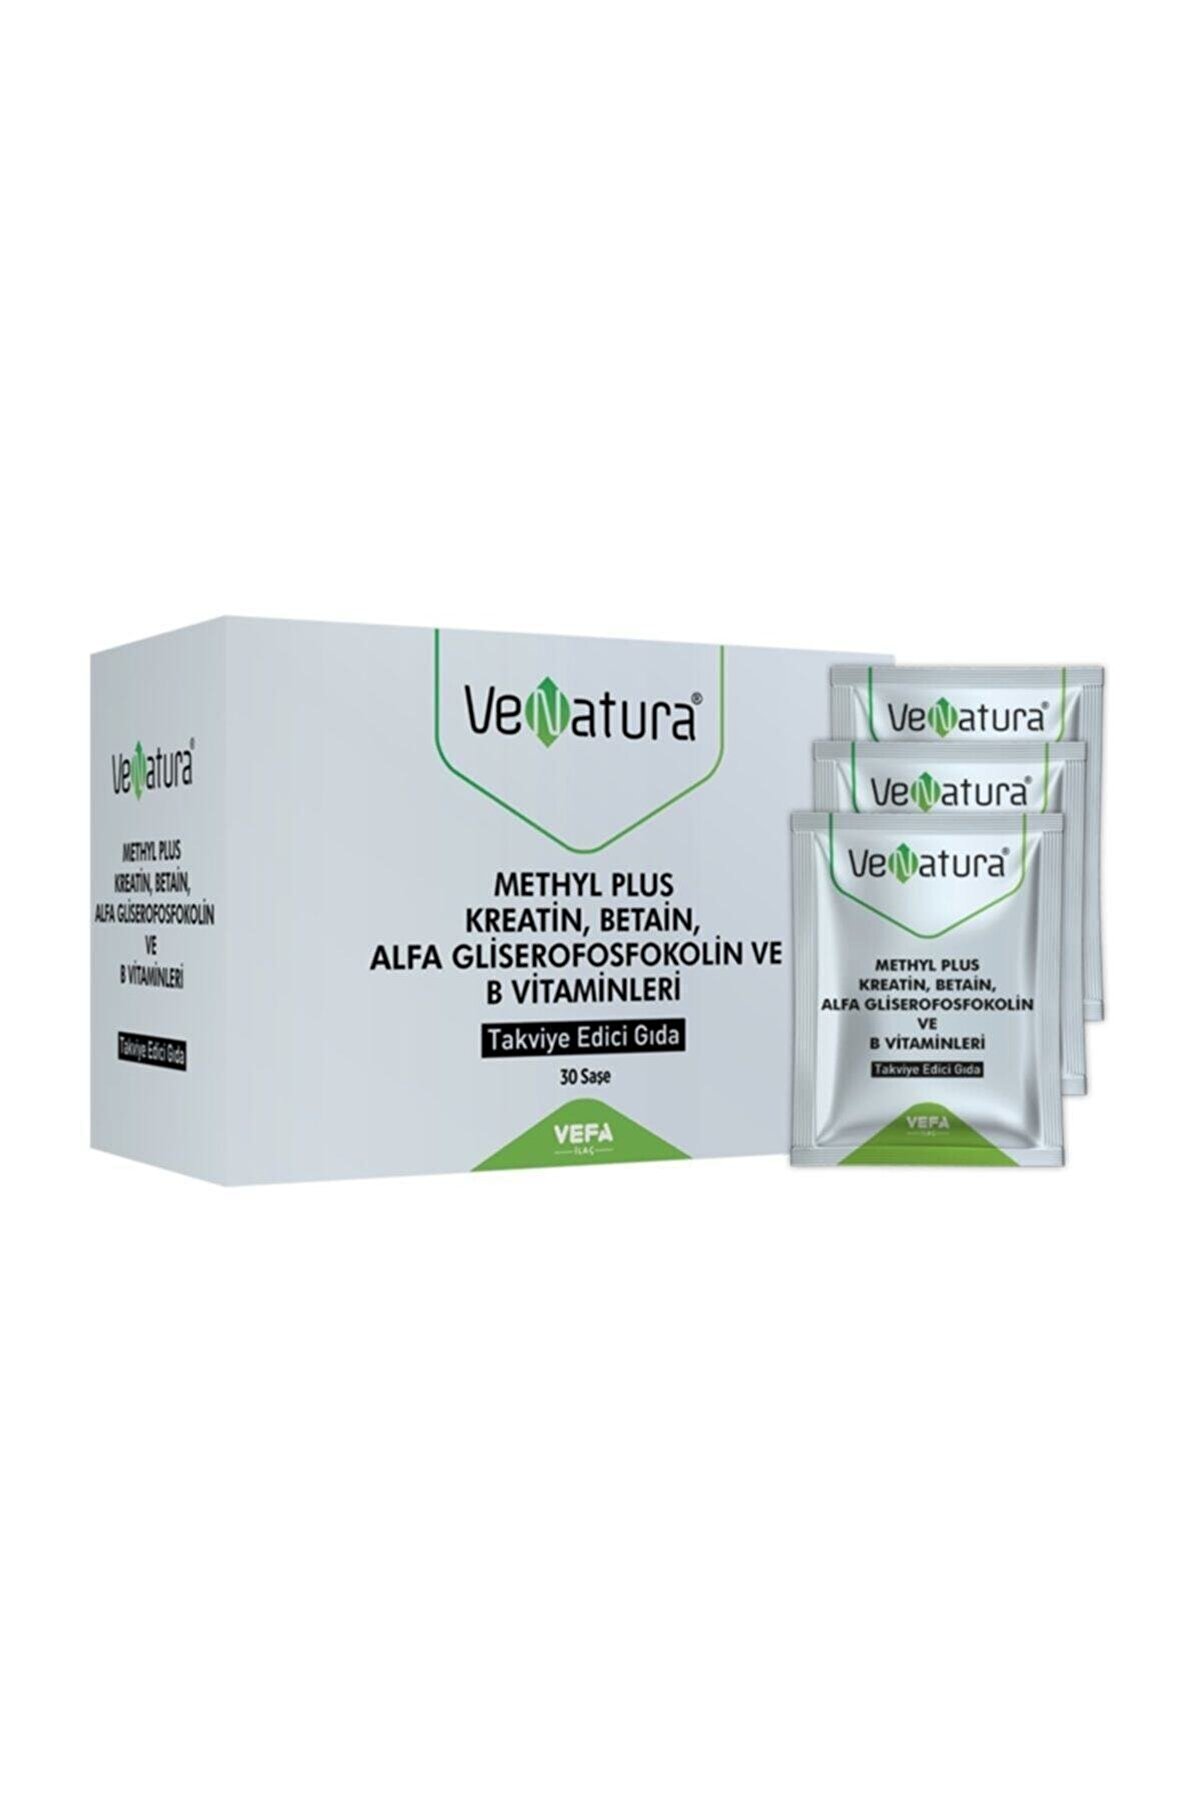 Venatura Methyl Plus Kreatin, Betain, Alfa Gliserofosfokolin Ve B Vitaminleri